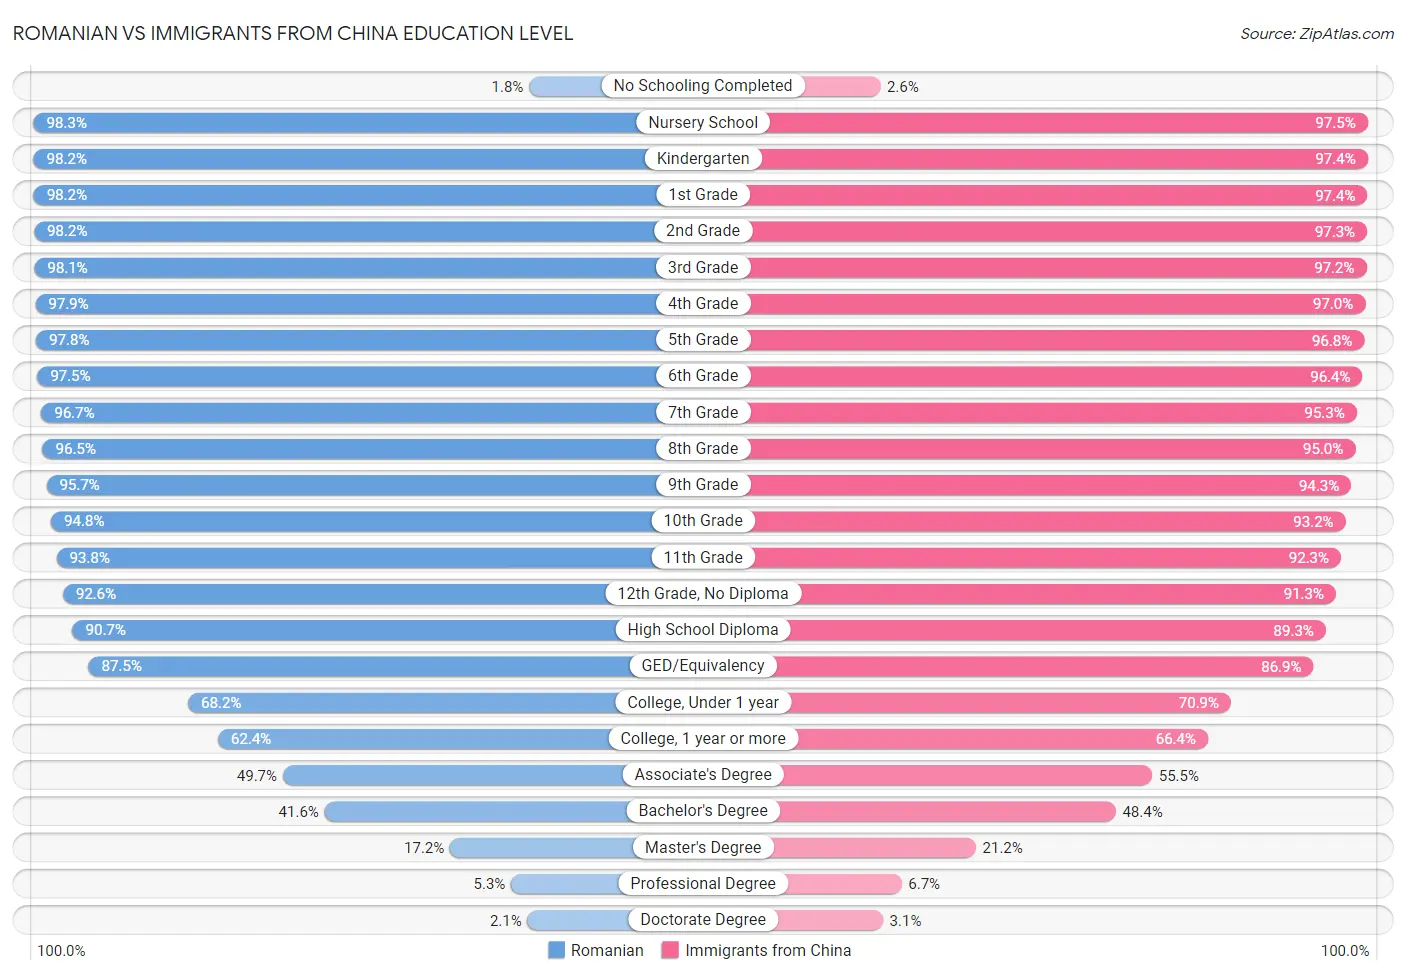 Romanian vs Immigrants from China Education Level